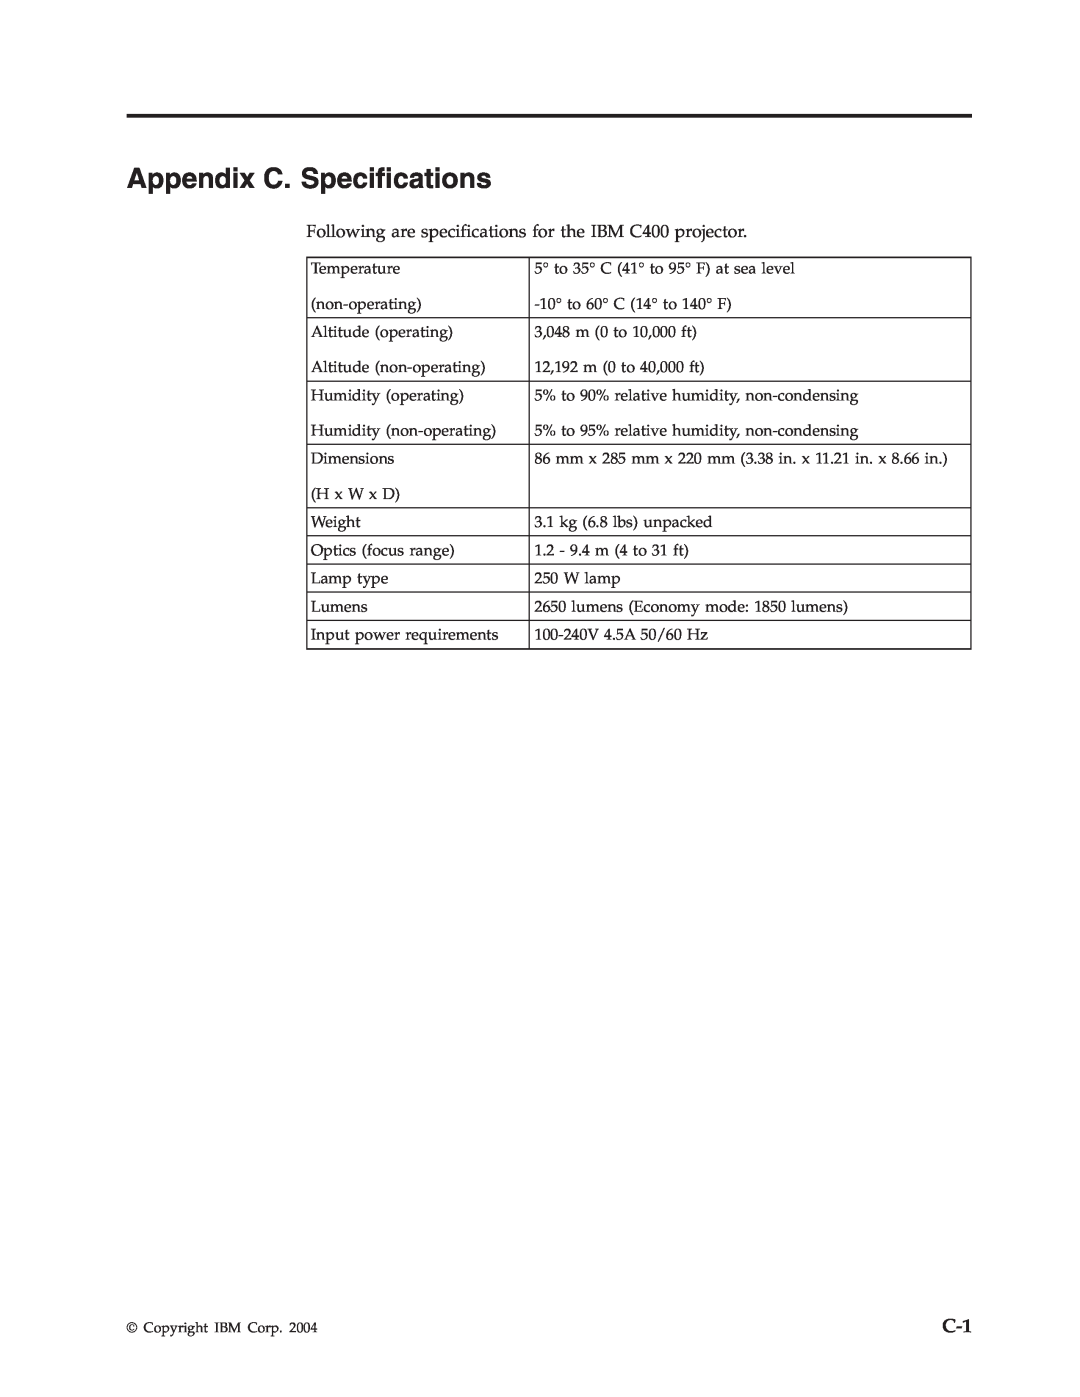 IBM PROJECTOR C400 manual Appendix C. Specifications 